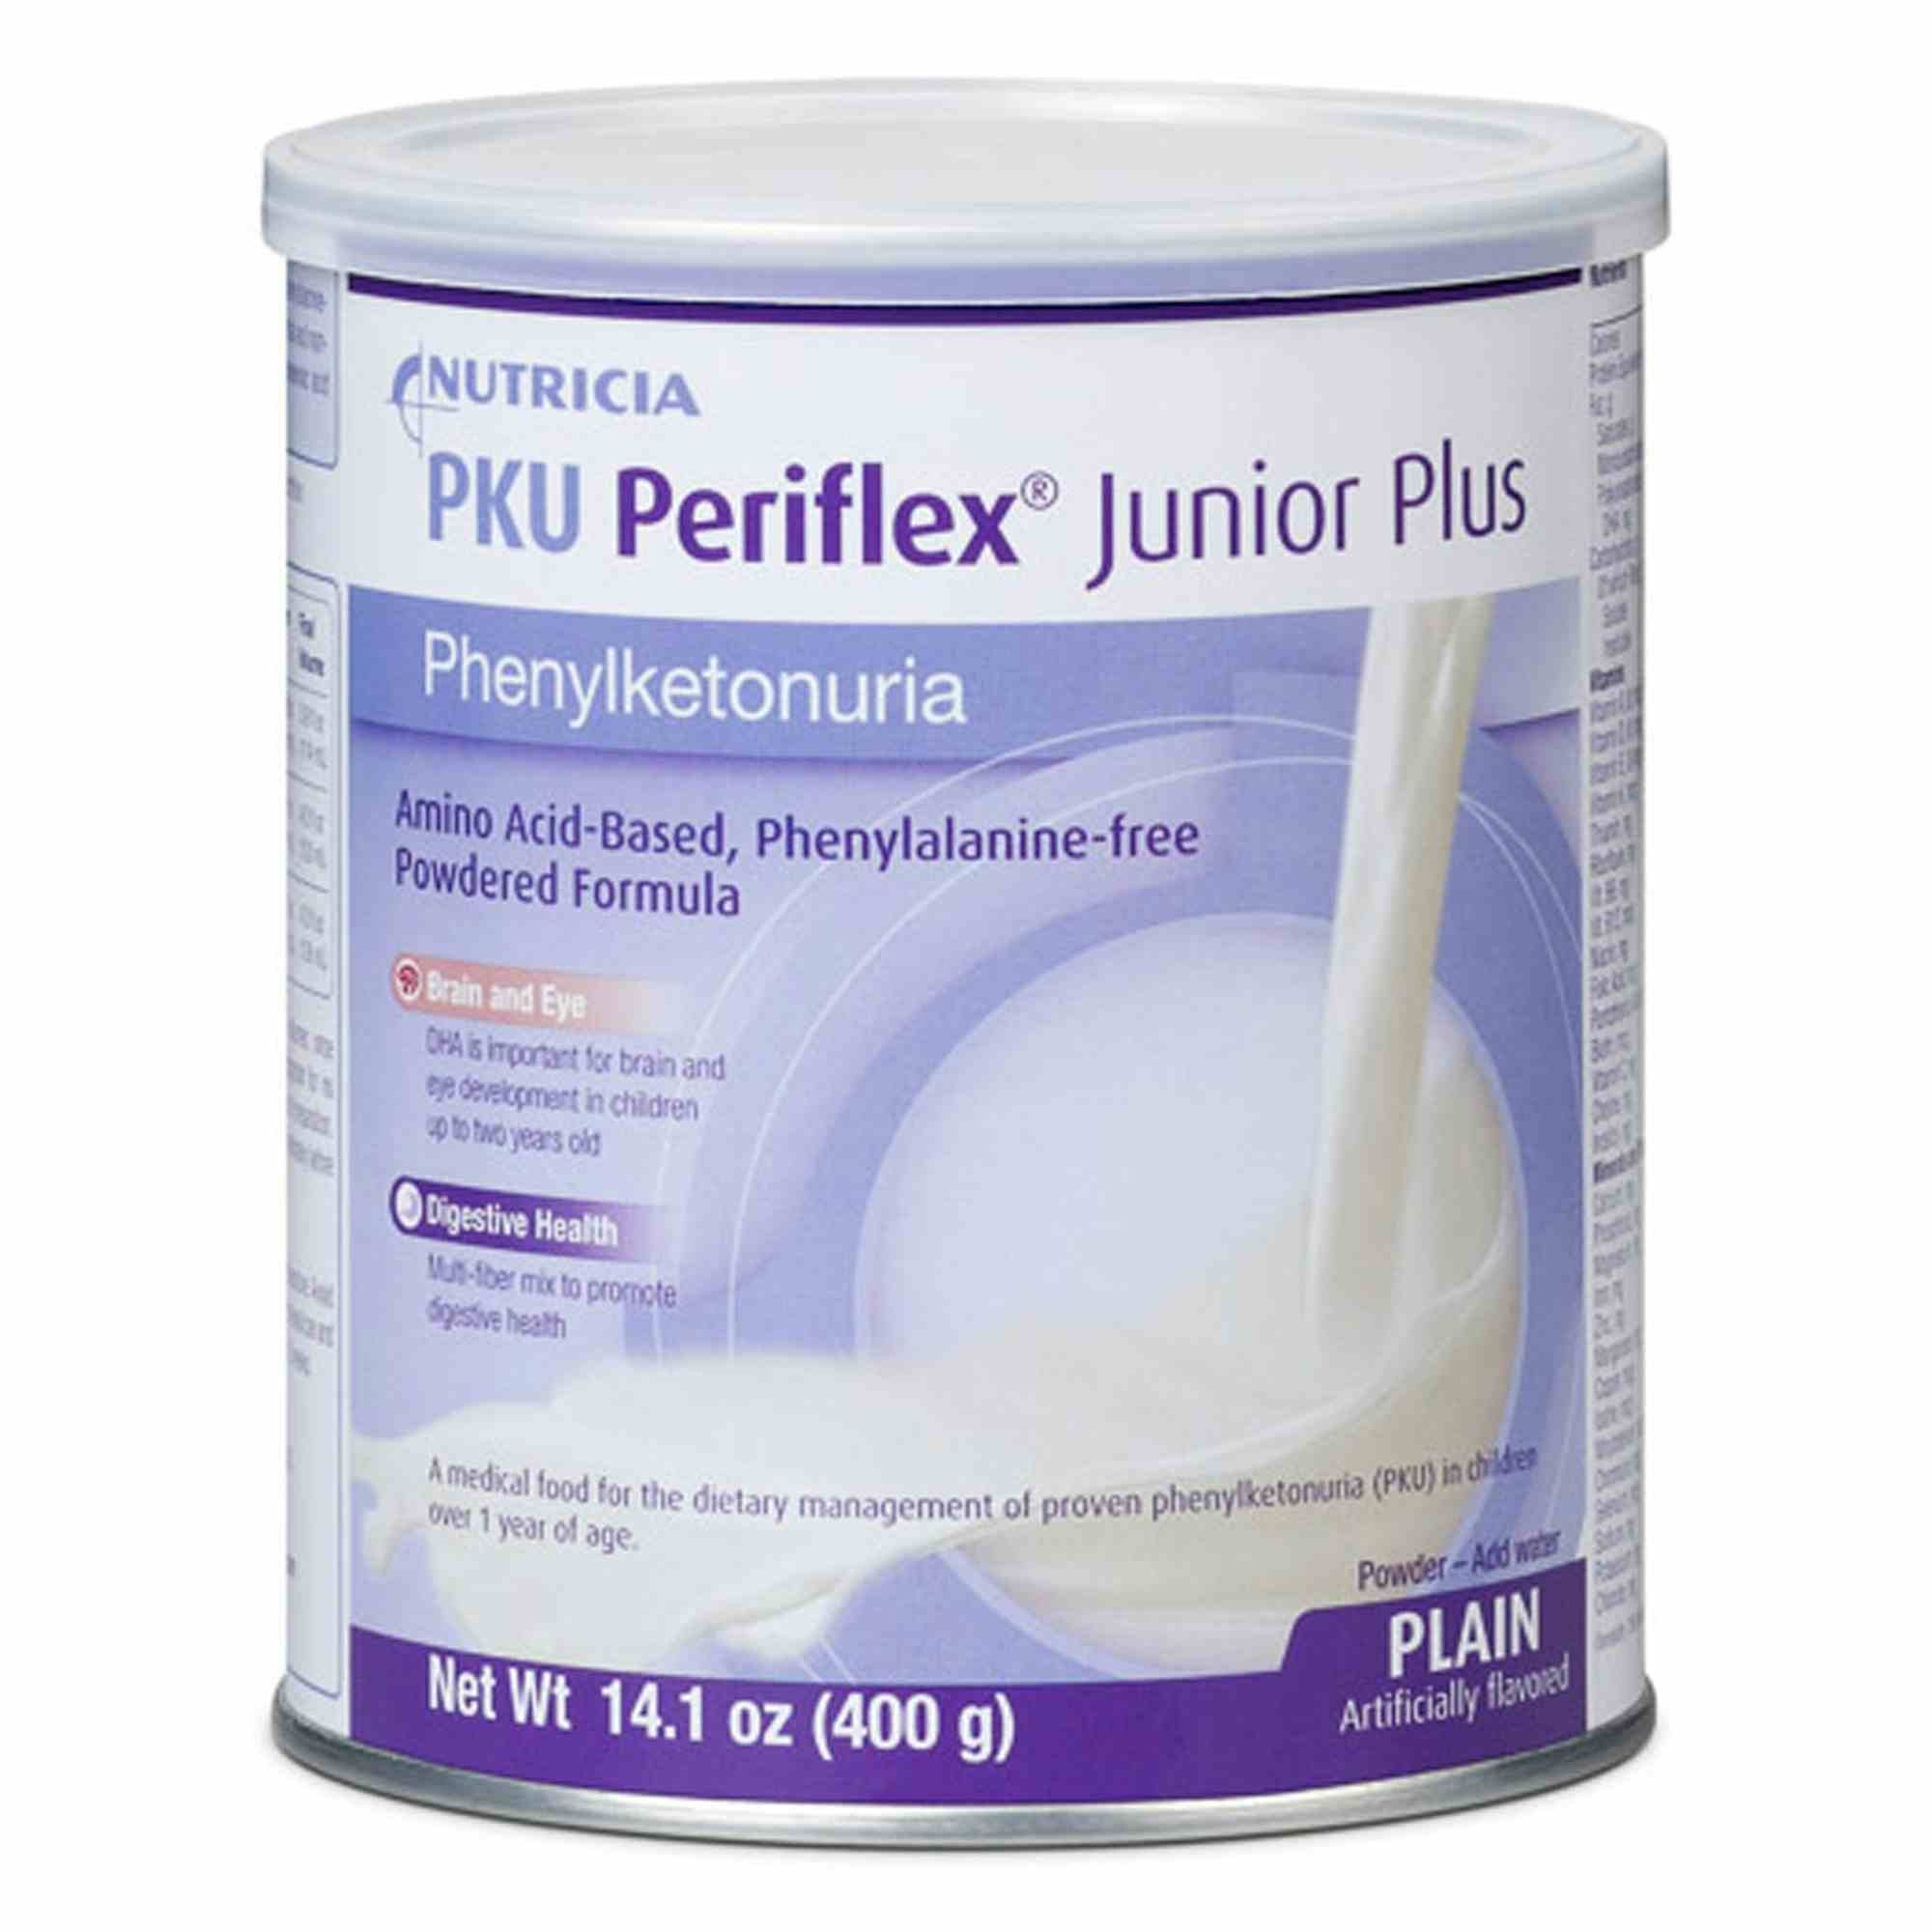 Nutricia PKU Periflex Junior Plus Amino Acid-Based Phenylalanine-Free Powdered Formula, 14.1 oz., 89477, 1 Each